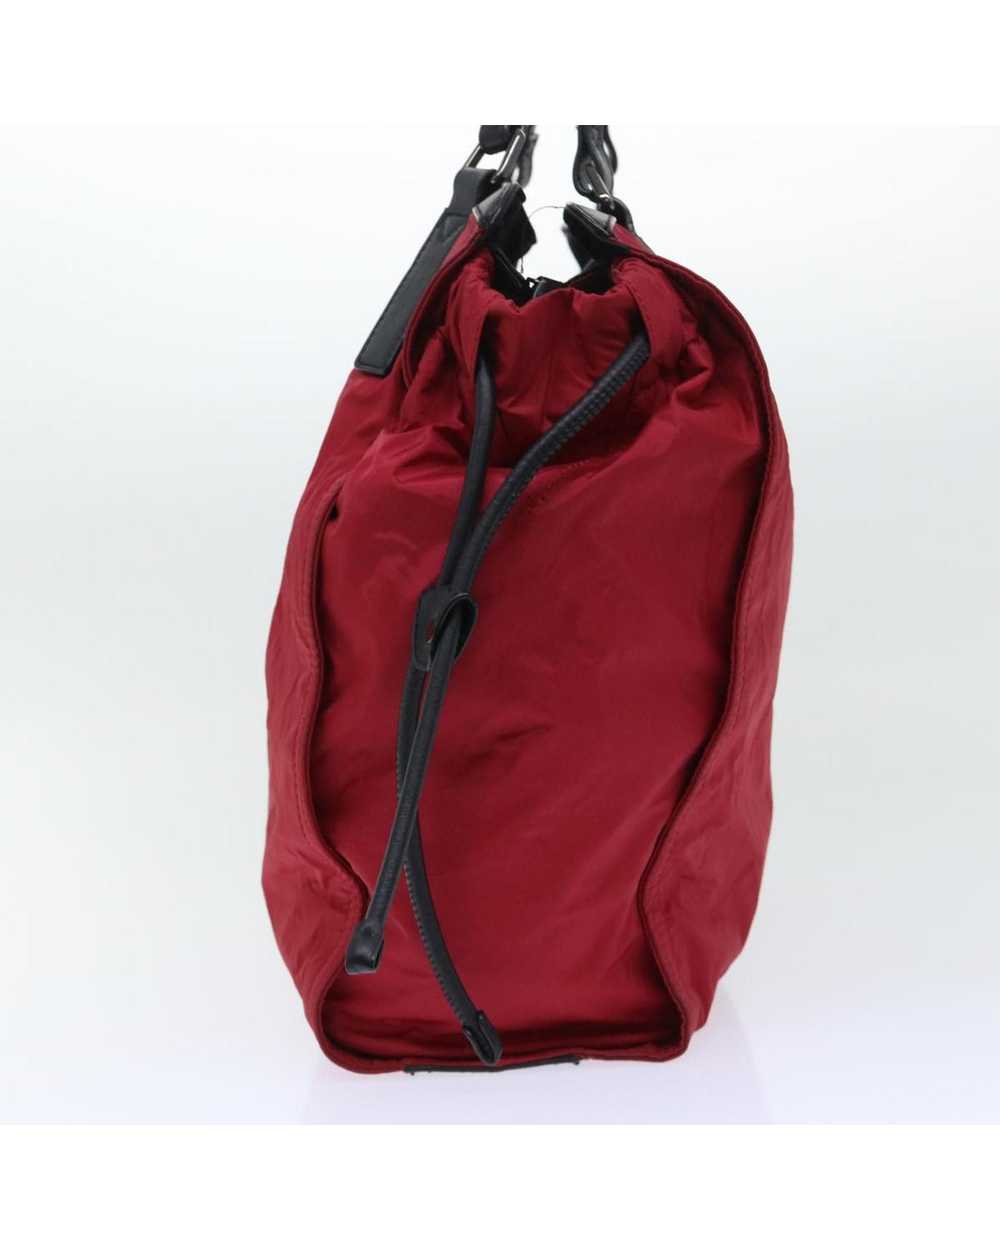 Burberry Red Nylon Leather Shoulder Bag - image 4